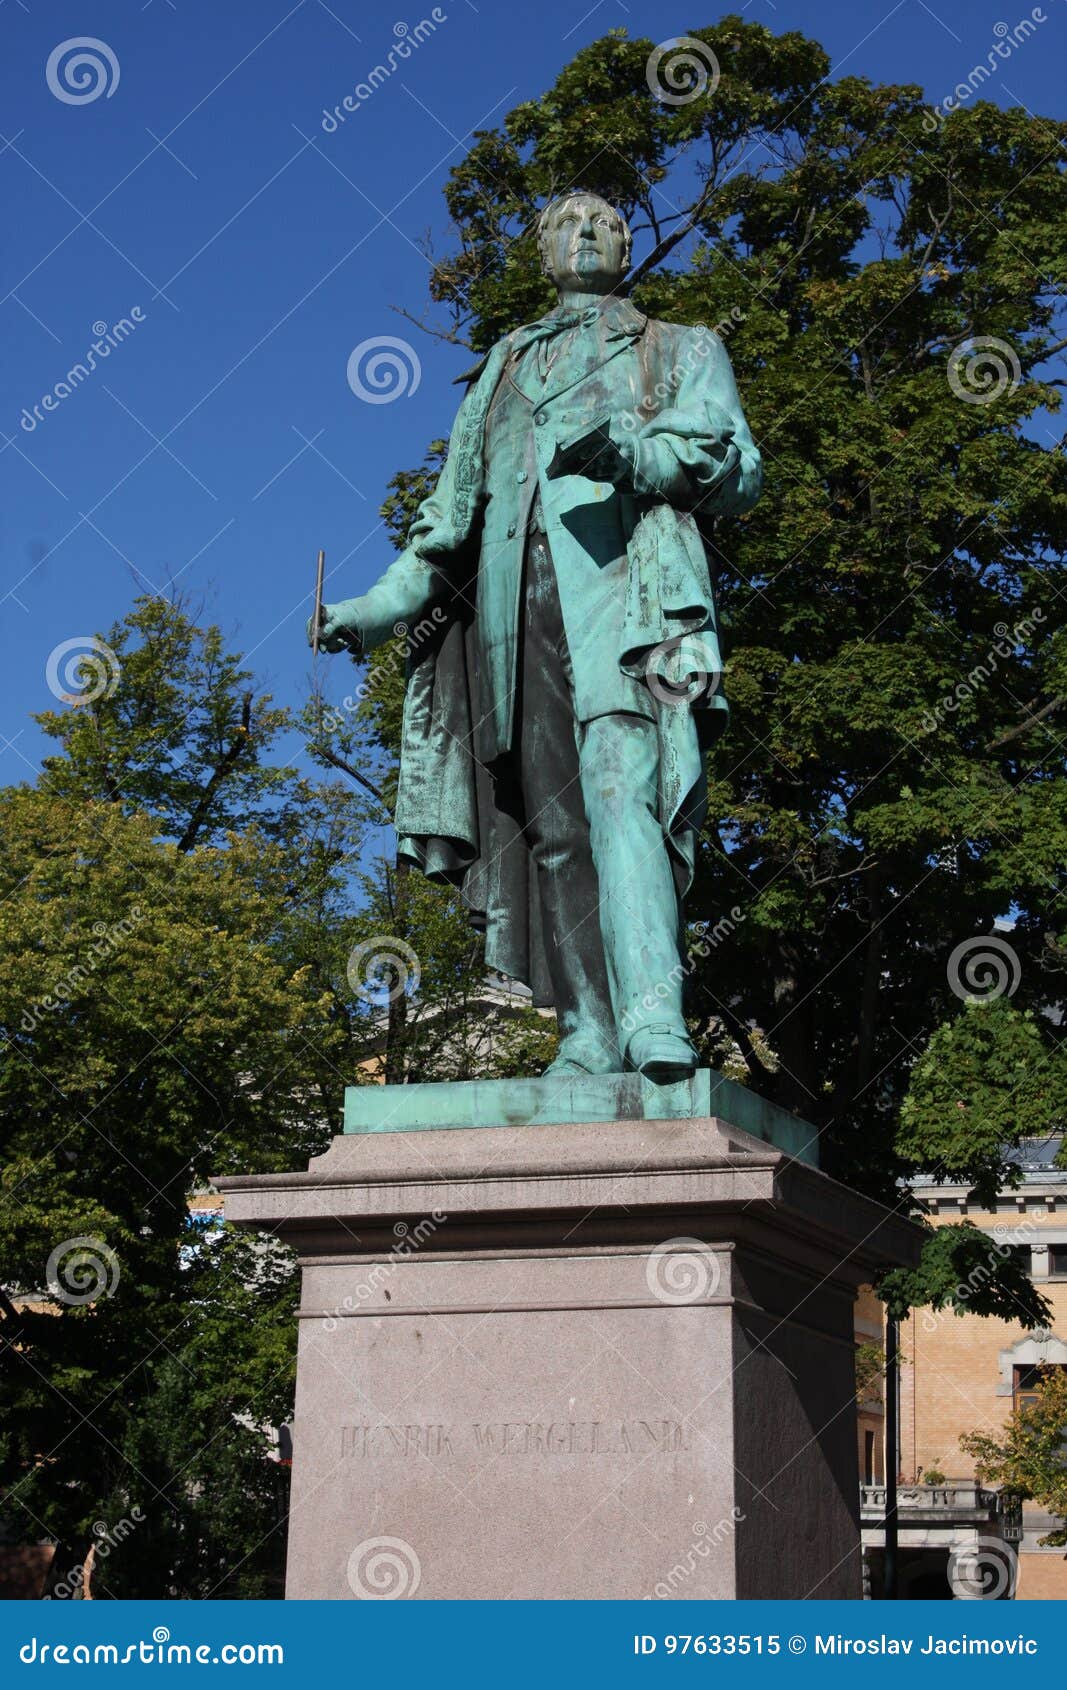 Henrik Wergeland Statue in Oslo, Norway Stock Image - Image of ...